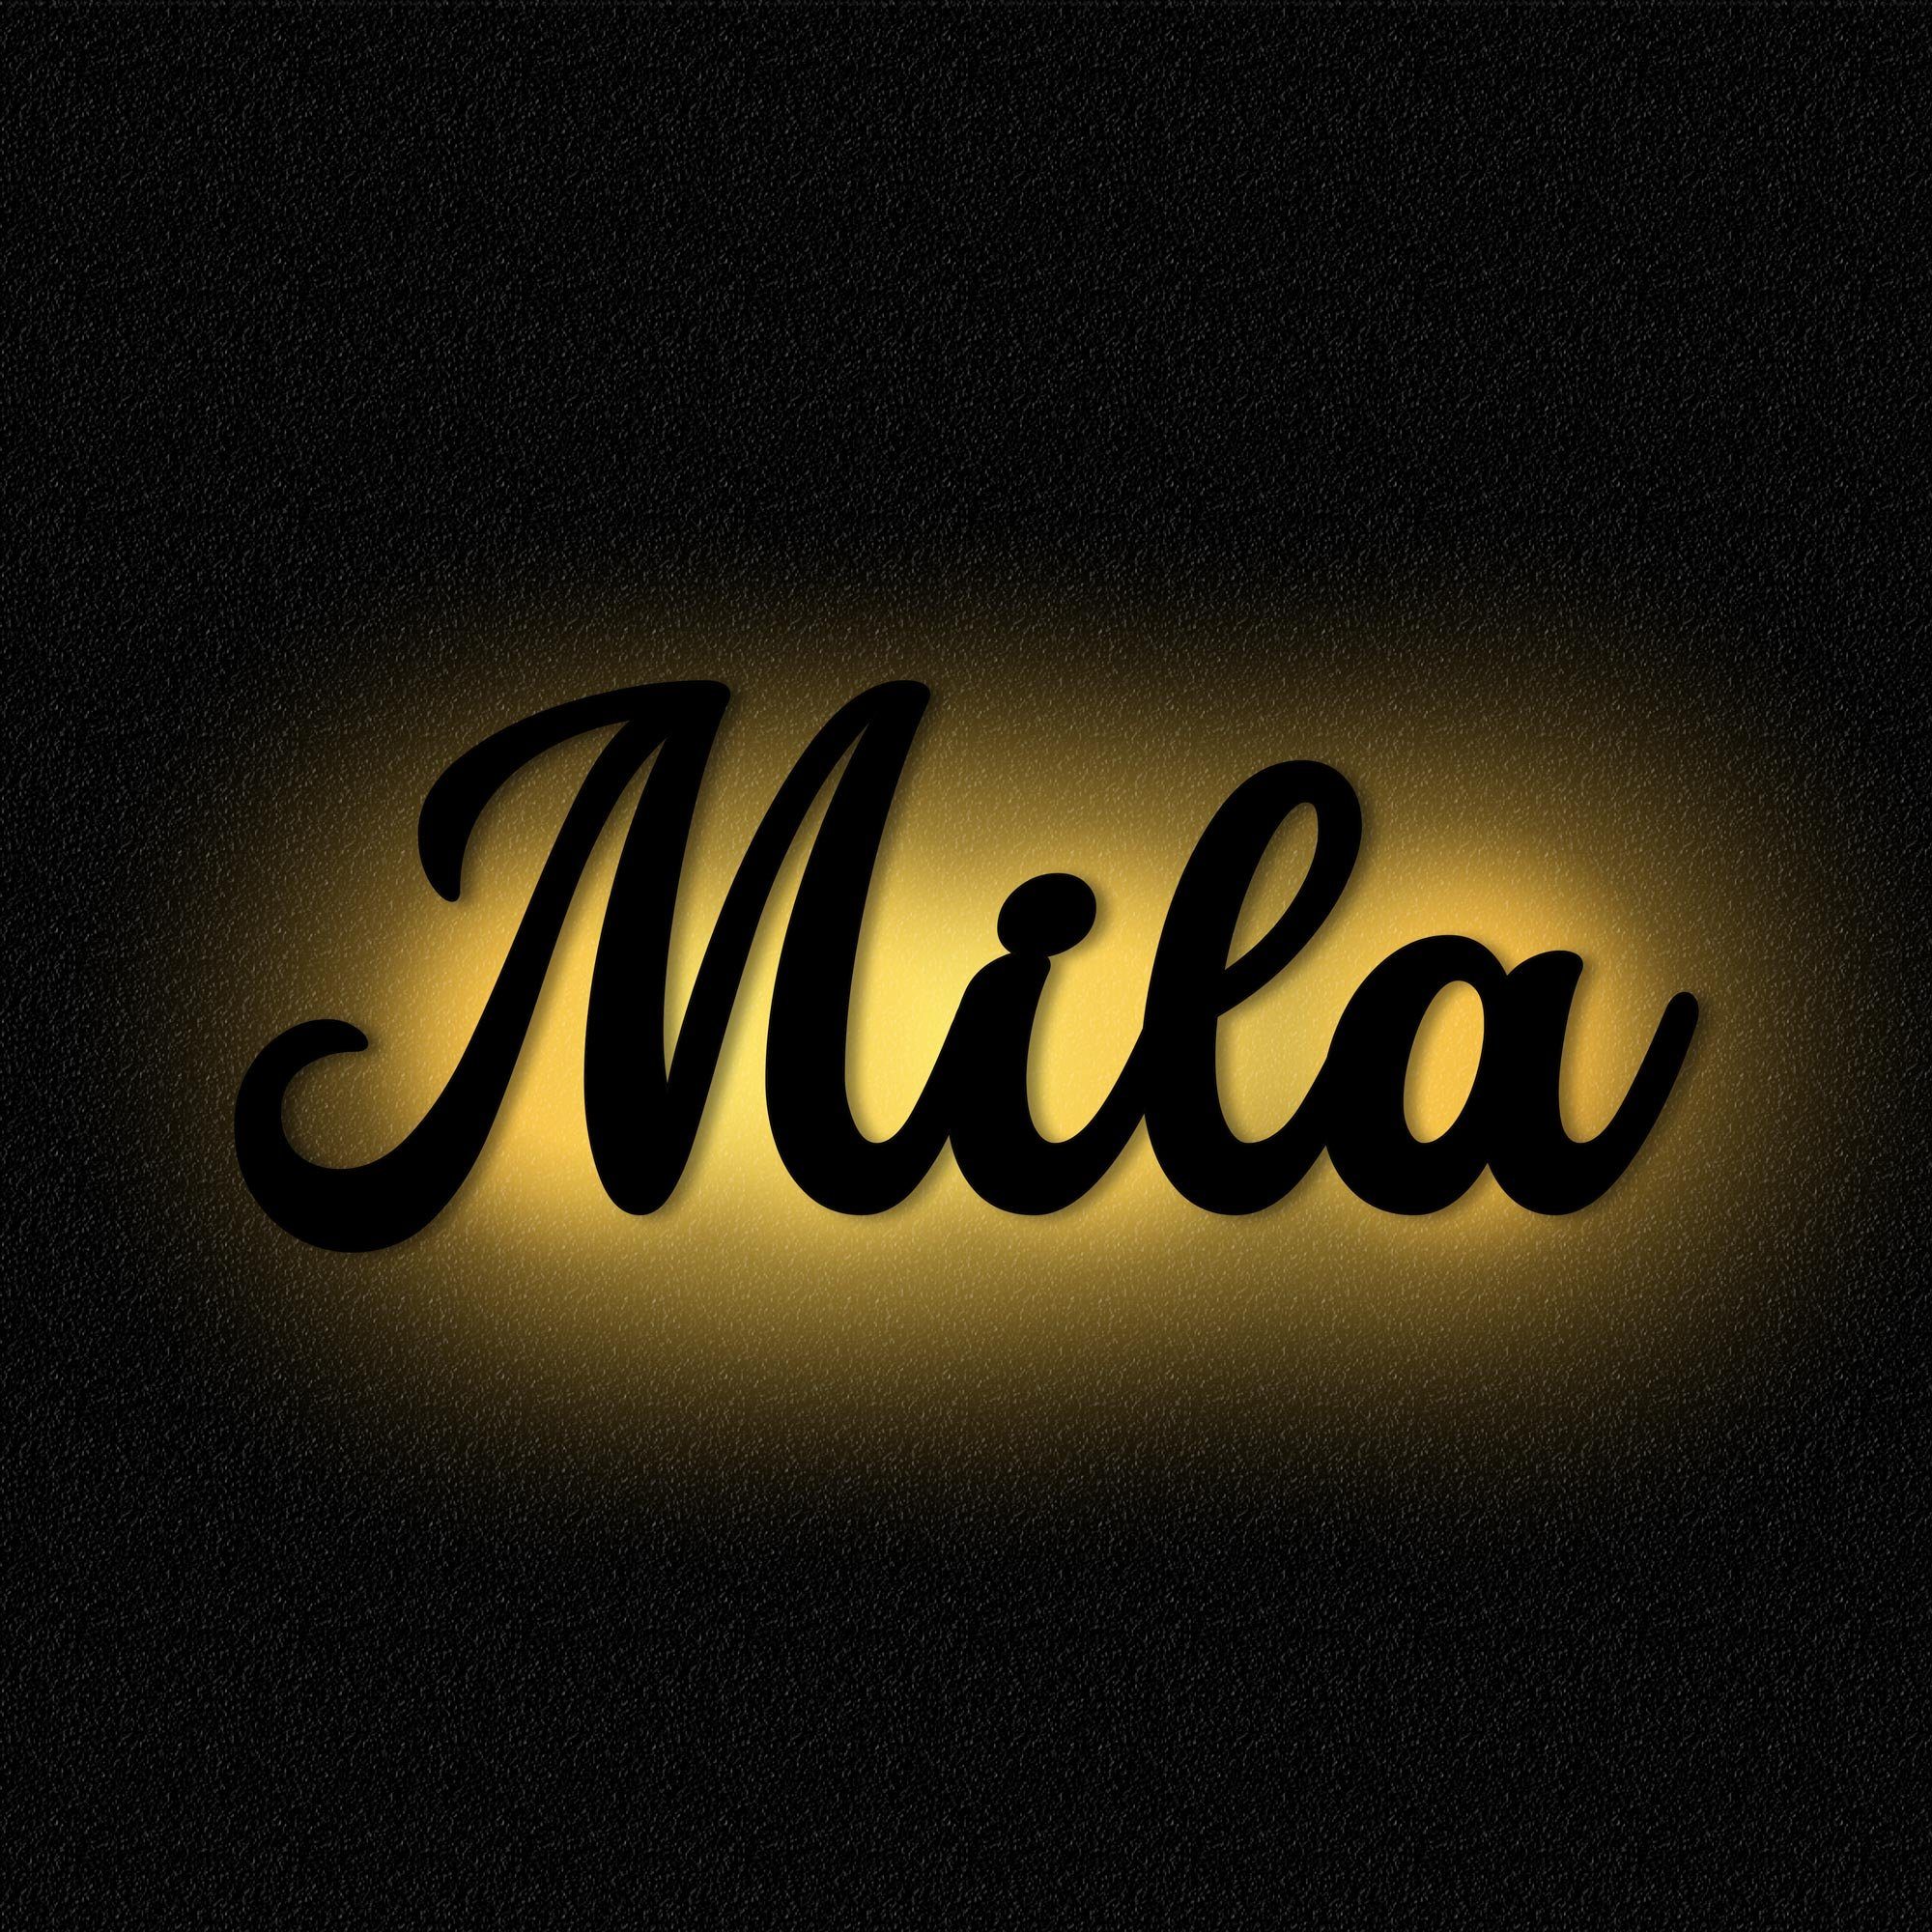 Namofactur LED Dekolicht Name Mila Deko Licht Kinder & Erwachsene Wandlampe I MDF Holz, LED fest integriert, Warmweiß